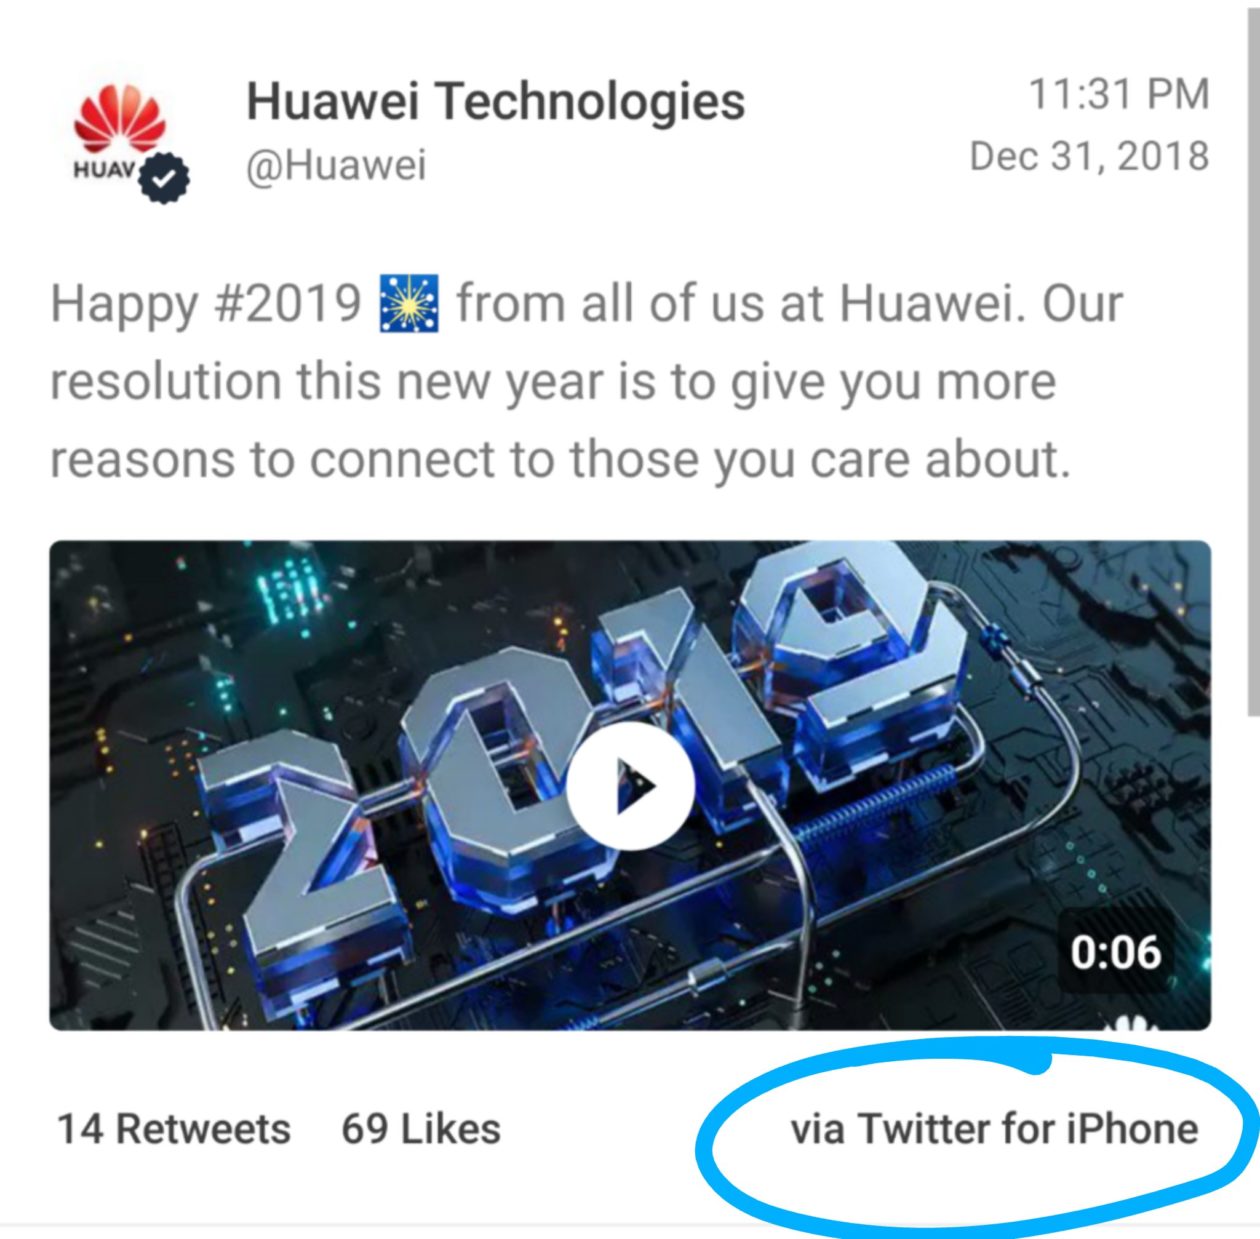 Huawei penalizes employees for tweeting via iPhone